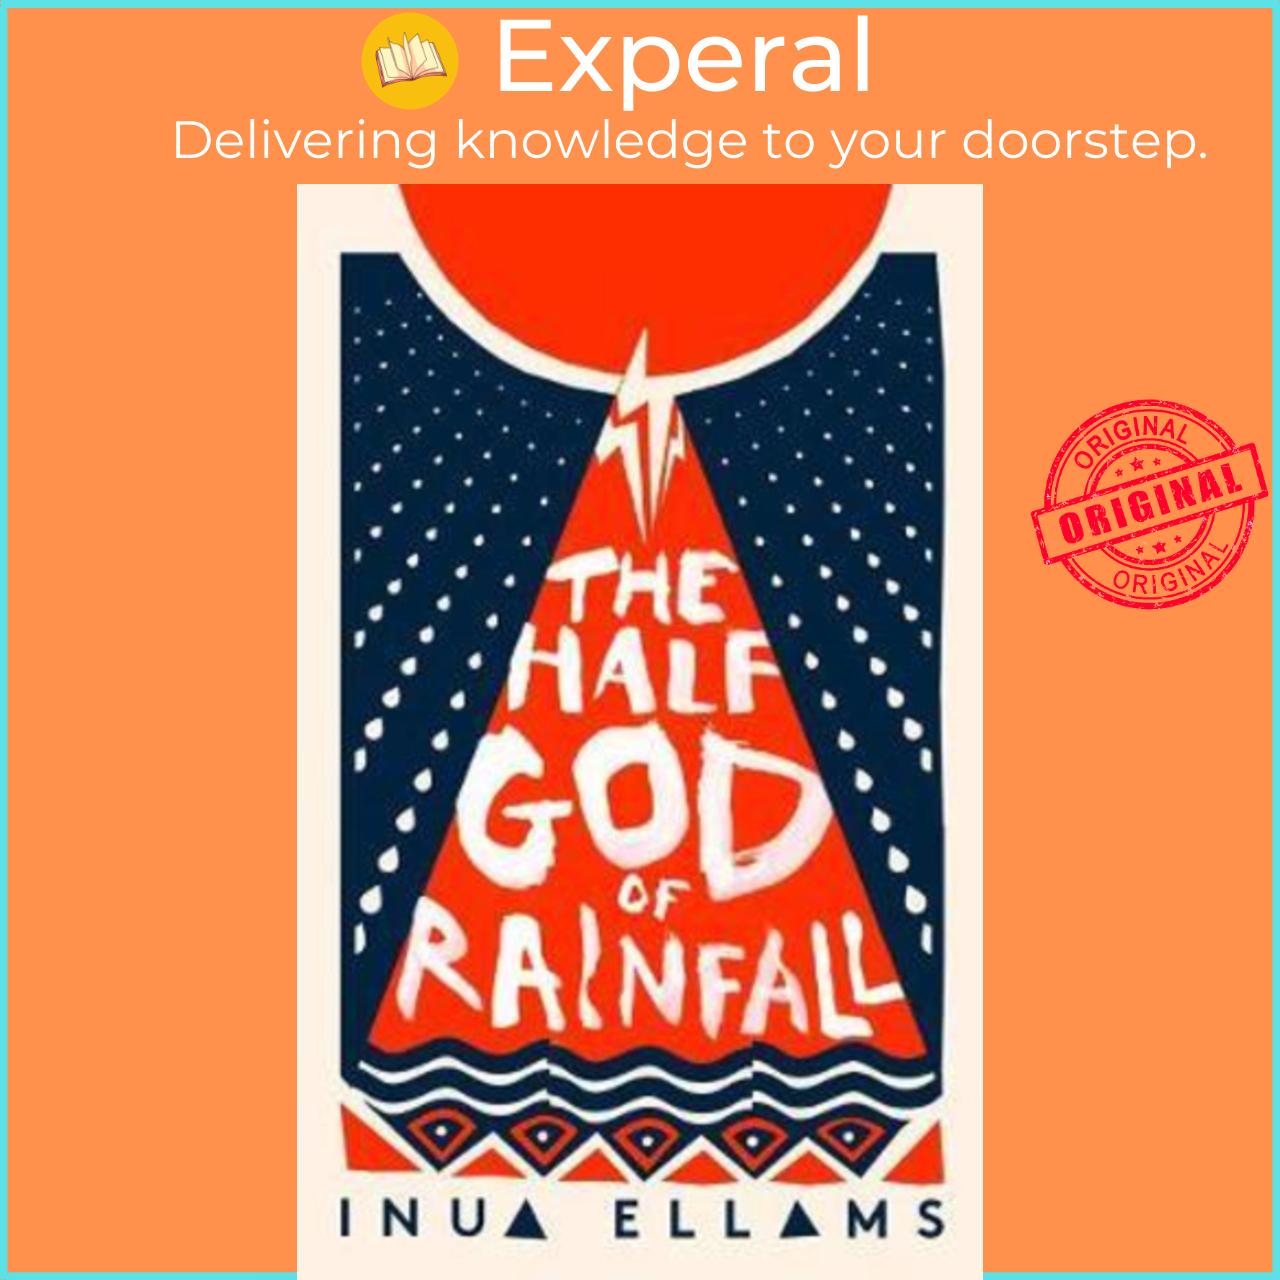 Hình ảnh Sách - The Half-God of Rainfall by Inua Ellams (UK edition, hardcover)